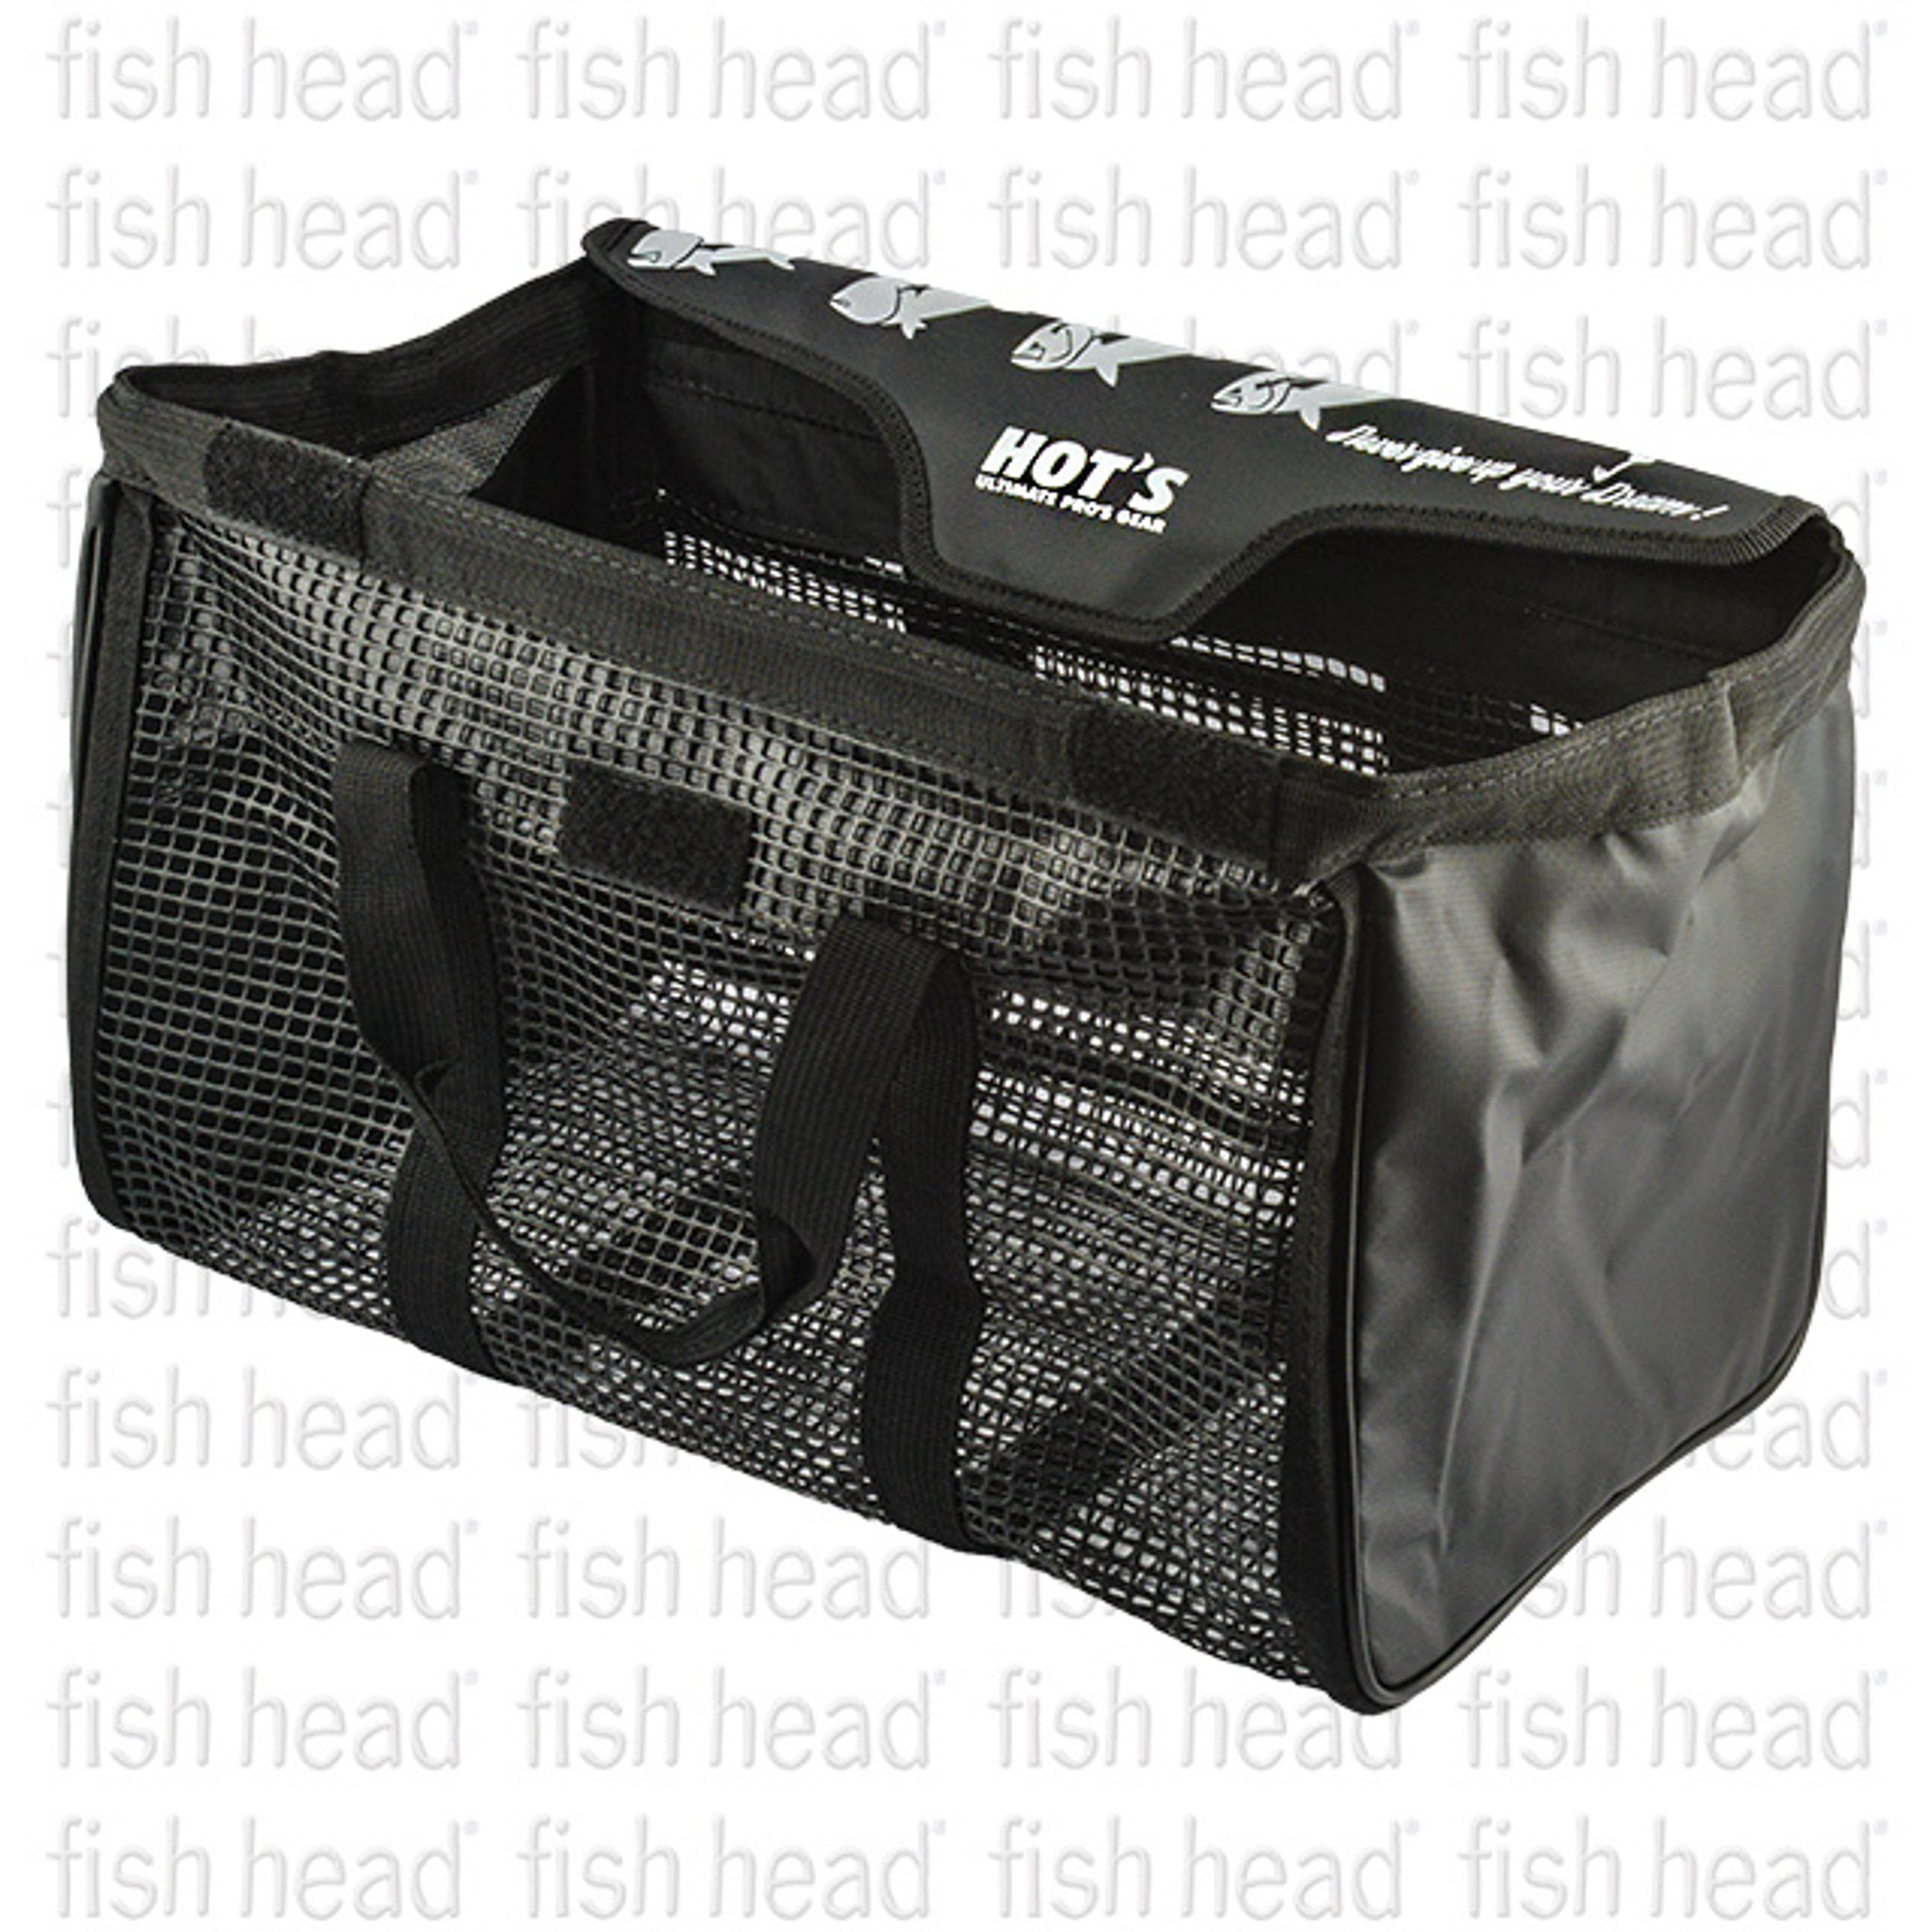 Hots Lure Mesh Bag - Fish Head